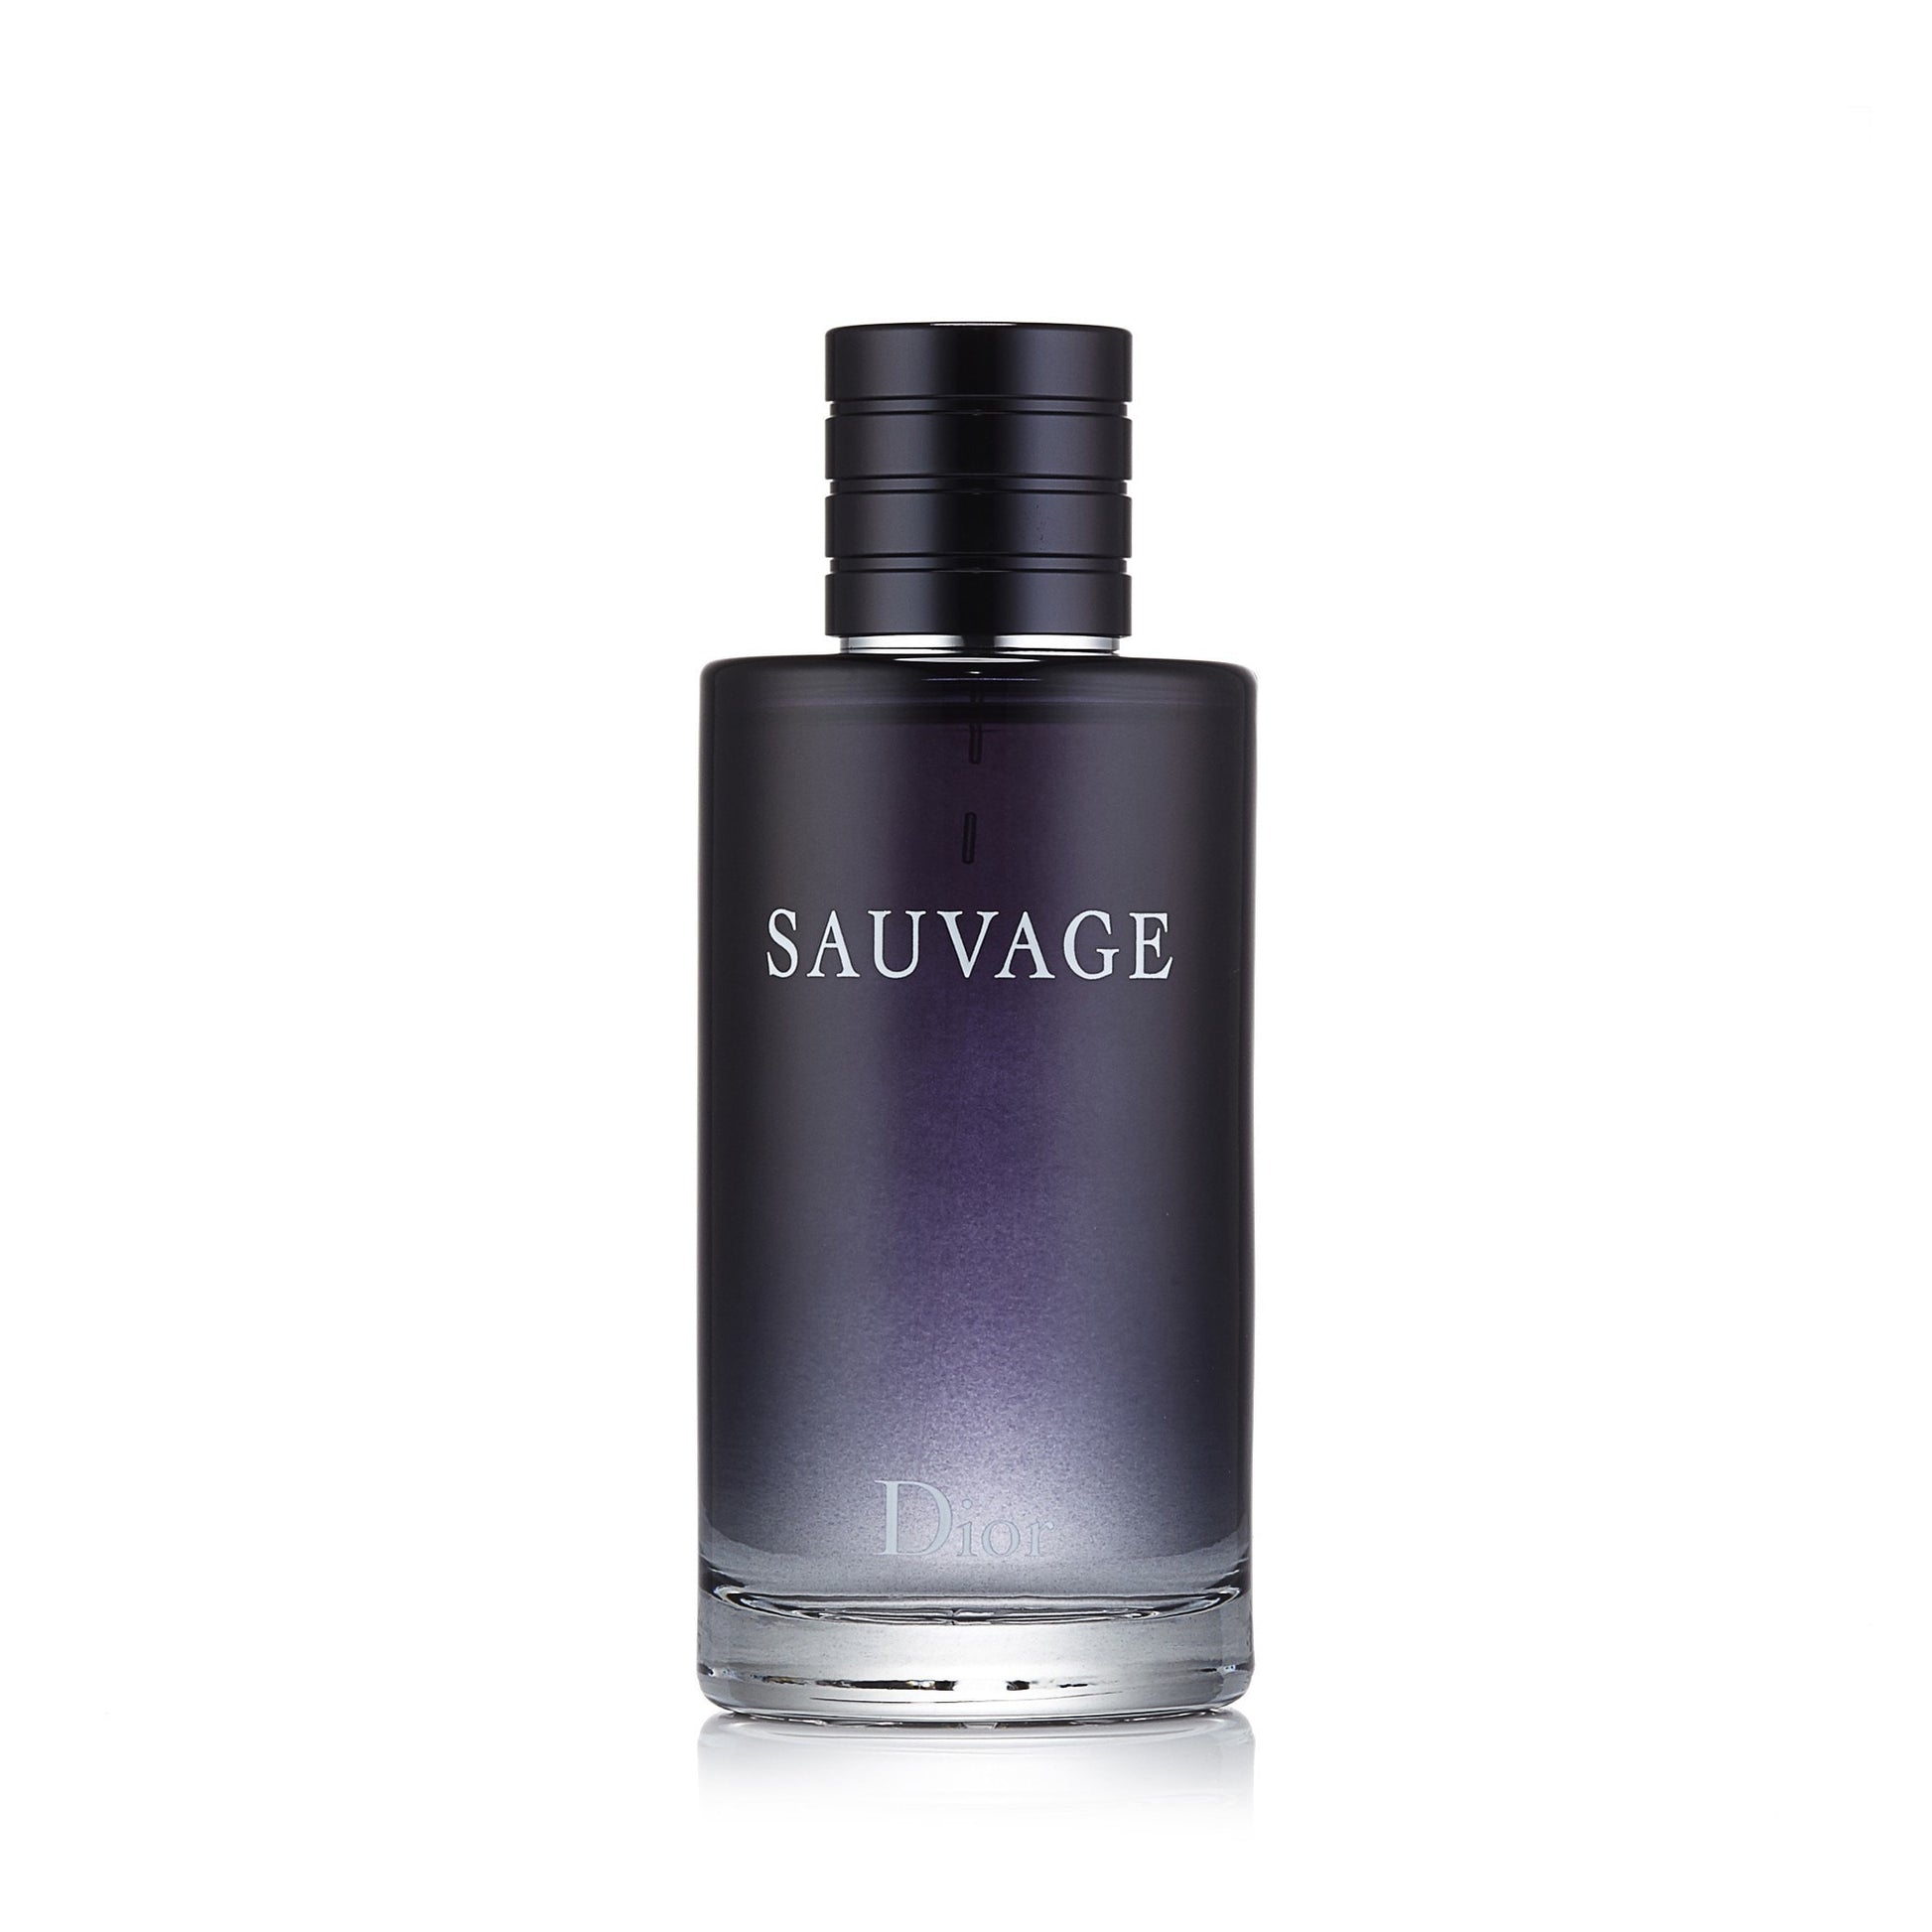 Sauvage Eau de Toilette Spray for Men by Dior 6.8 oz. Click to open in modal